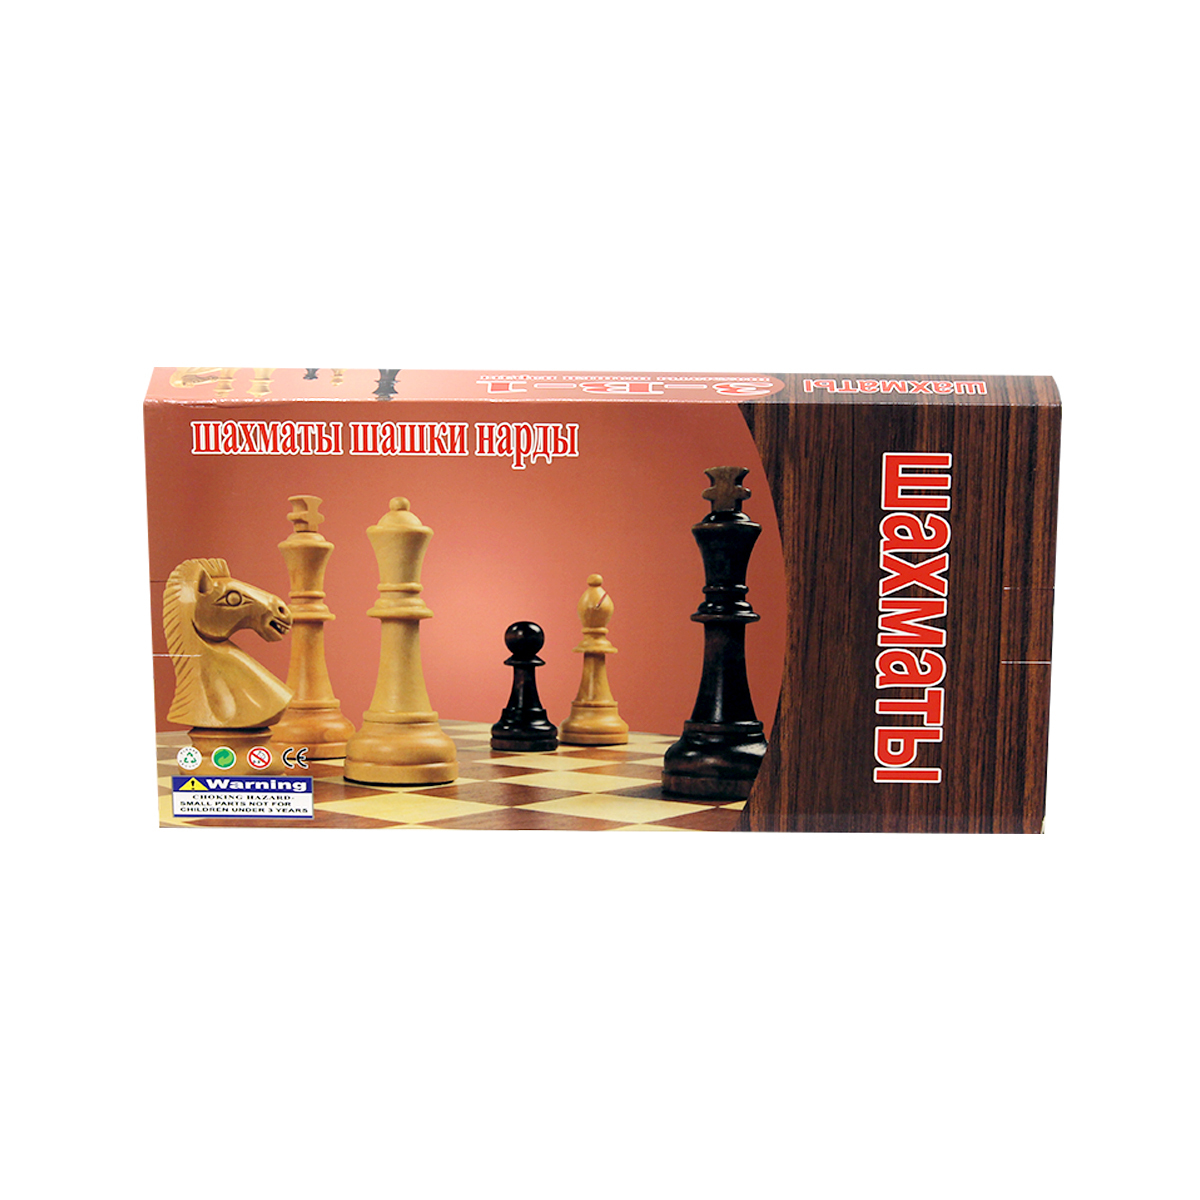 Playwell Chess Board Wood King KCM10